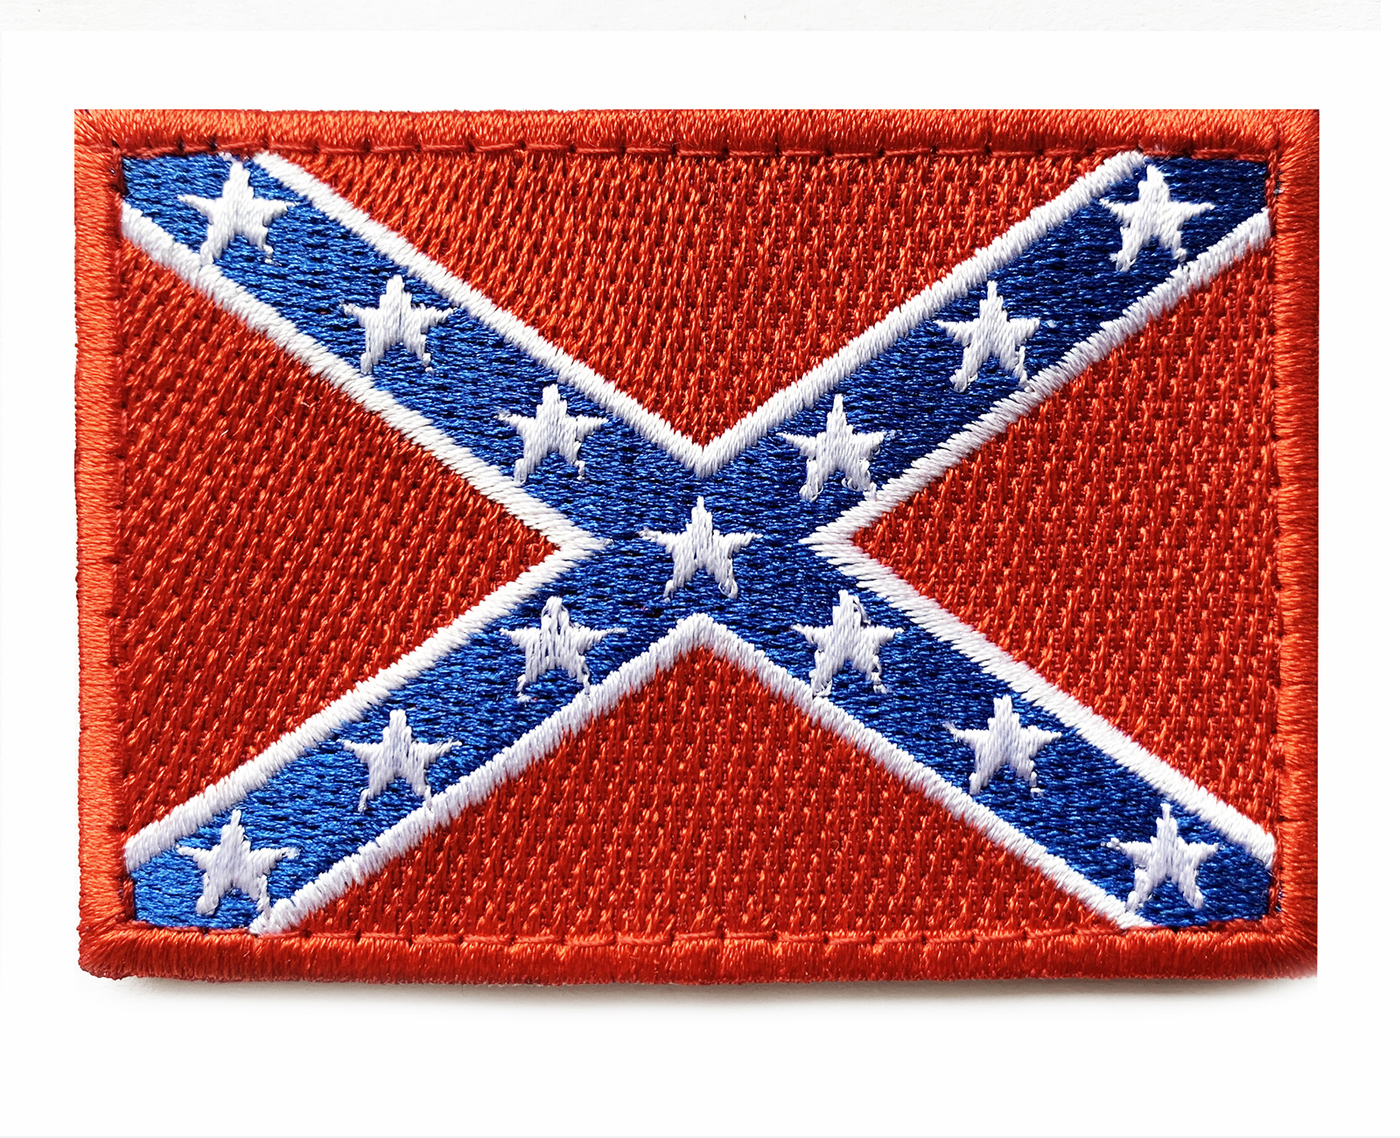 Confederate flag emoji copy and paste